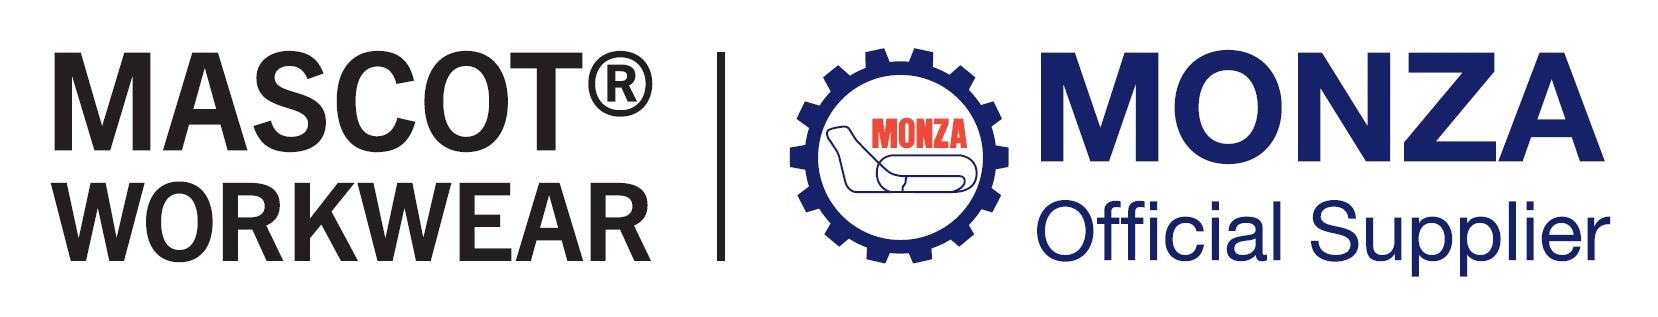 2019 - MASCOT<span>&reg; WORKWEAR -&nbsp; Monza - logo</span>